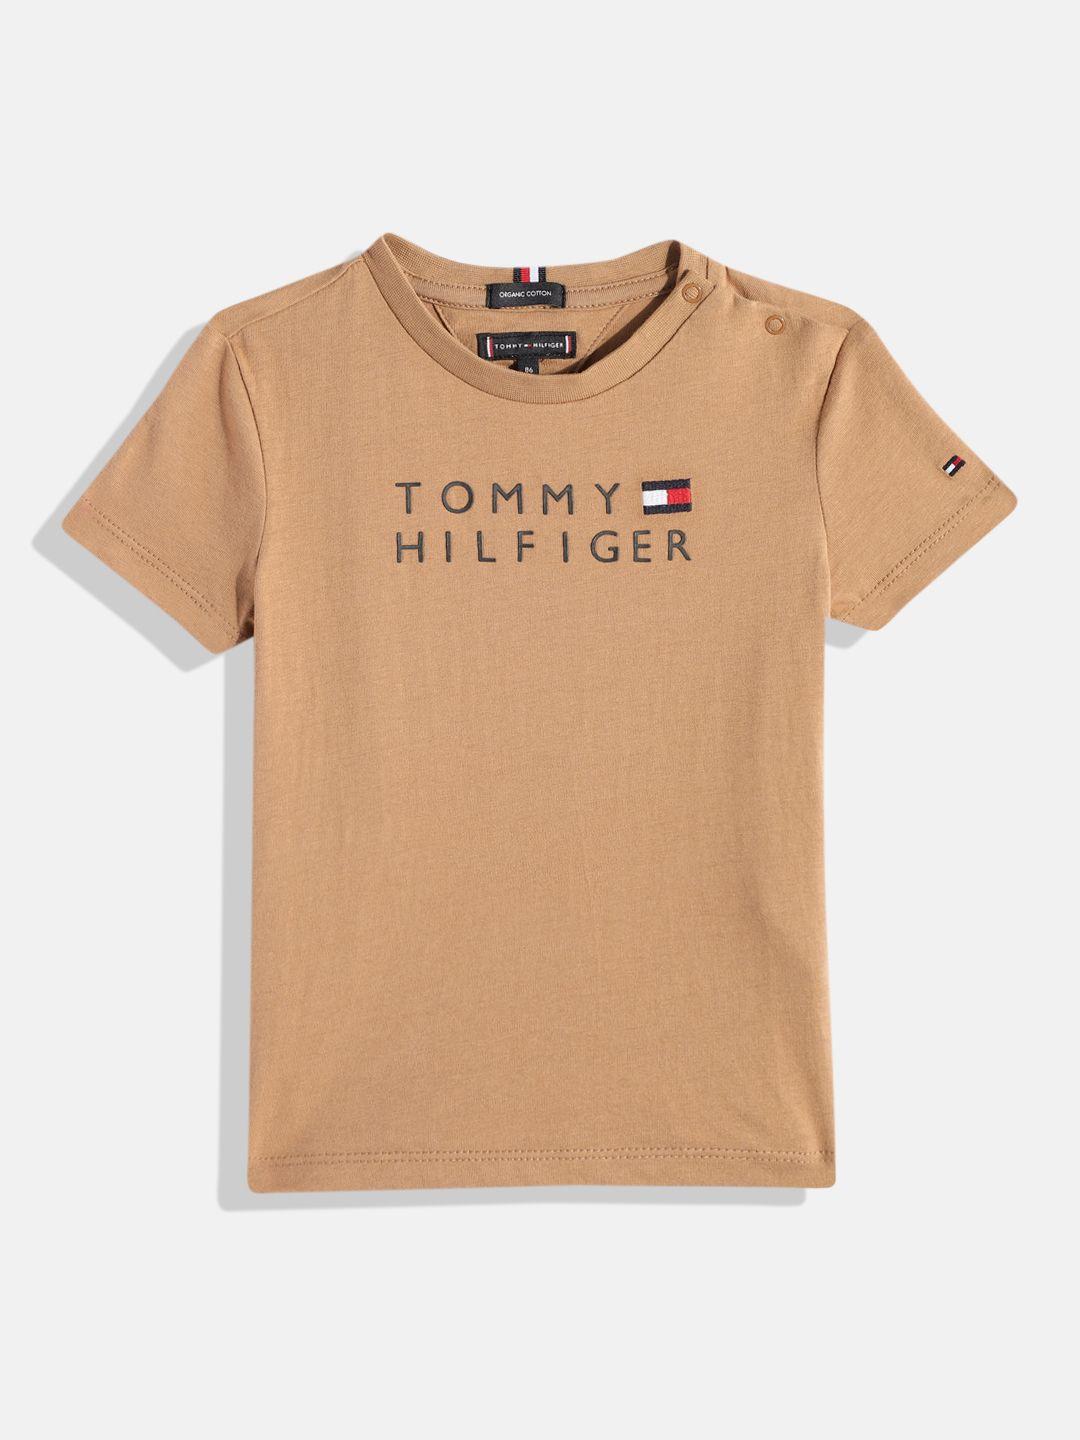 tommy hilfiger boys brand logo printed organic cotton t-shirt